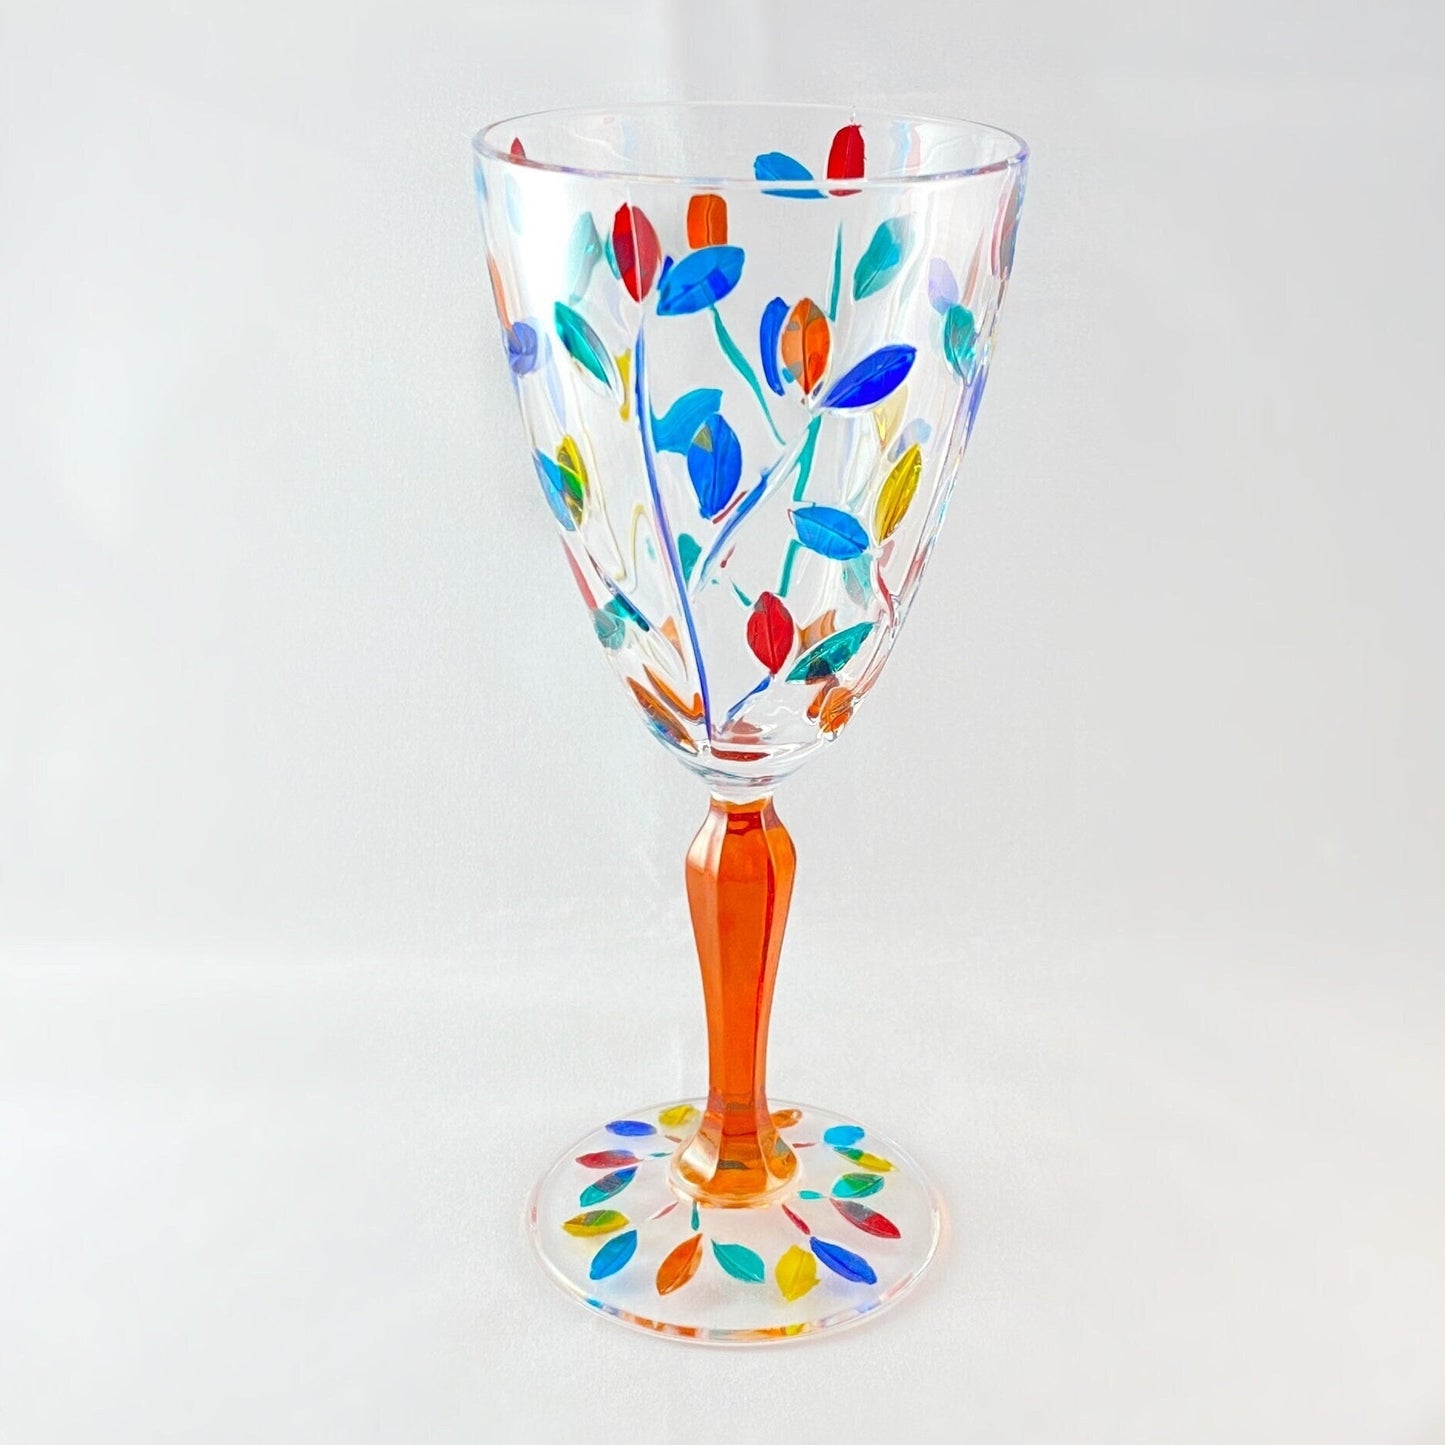 Orange Stem Tree of Life Venetian Glass Wine Glass - Handmade in Italy, Colorful Murano Glass